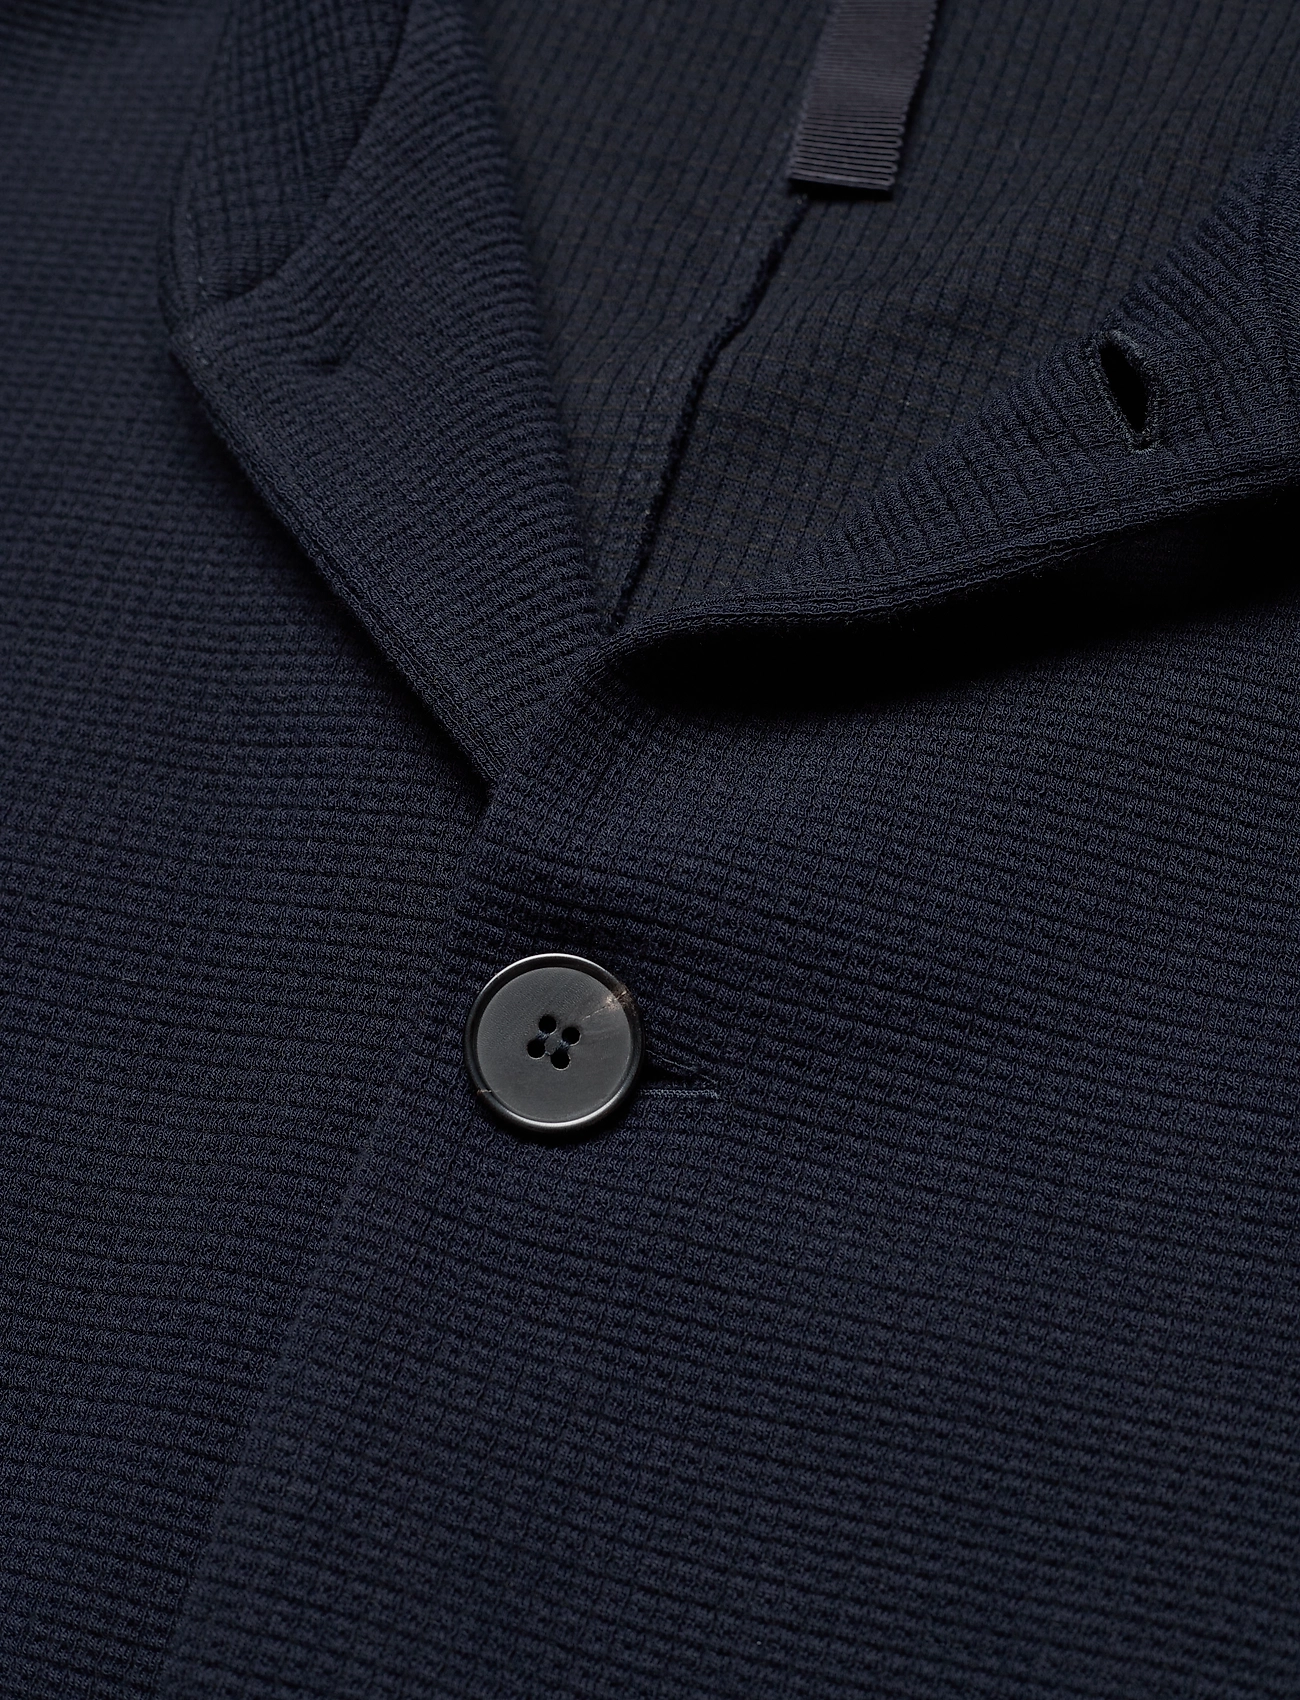 Harris Wharf London - C9427PGR Nehru jacket - vestes légères use default - dark blue - 2